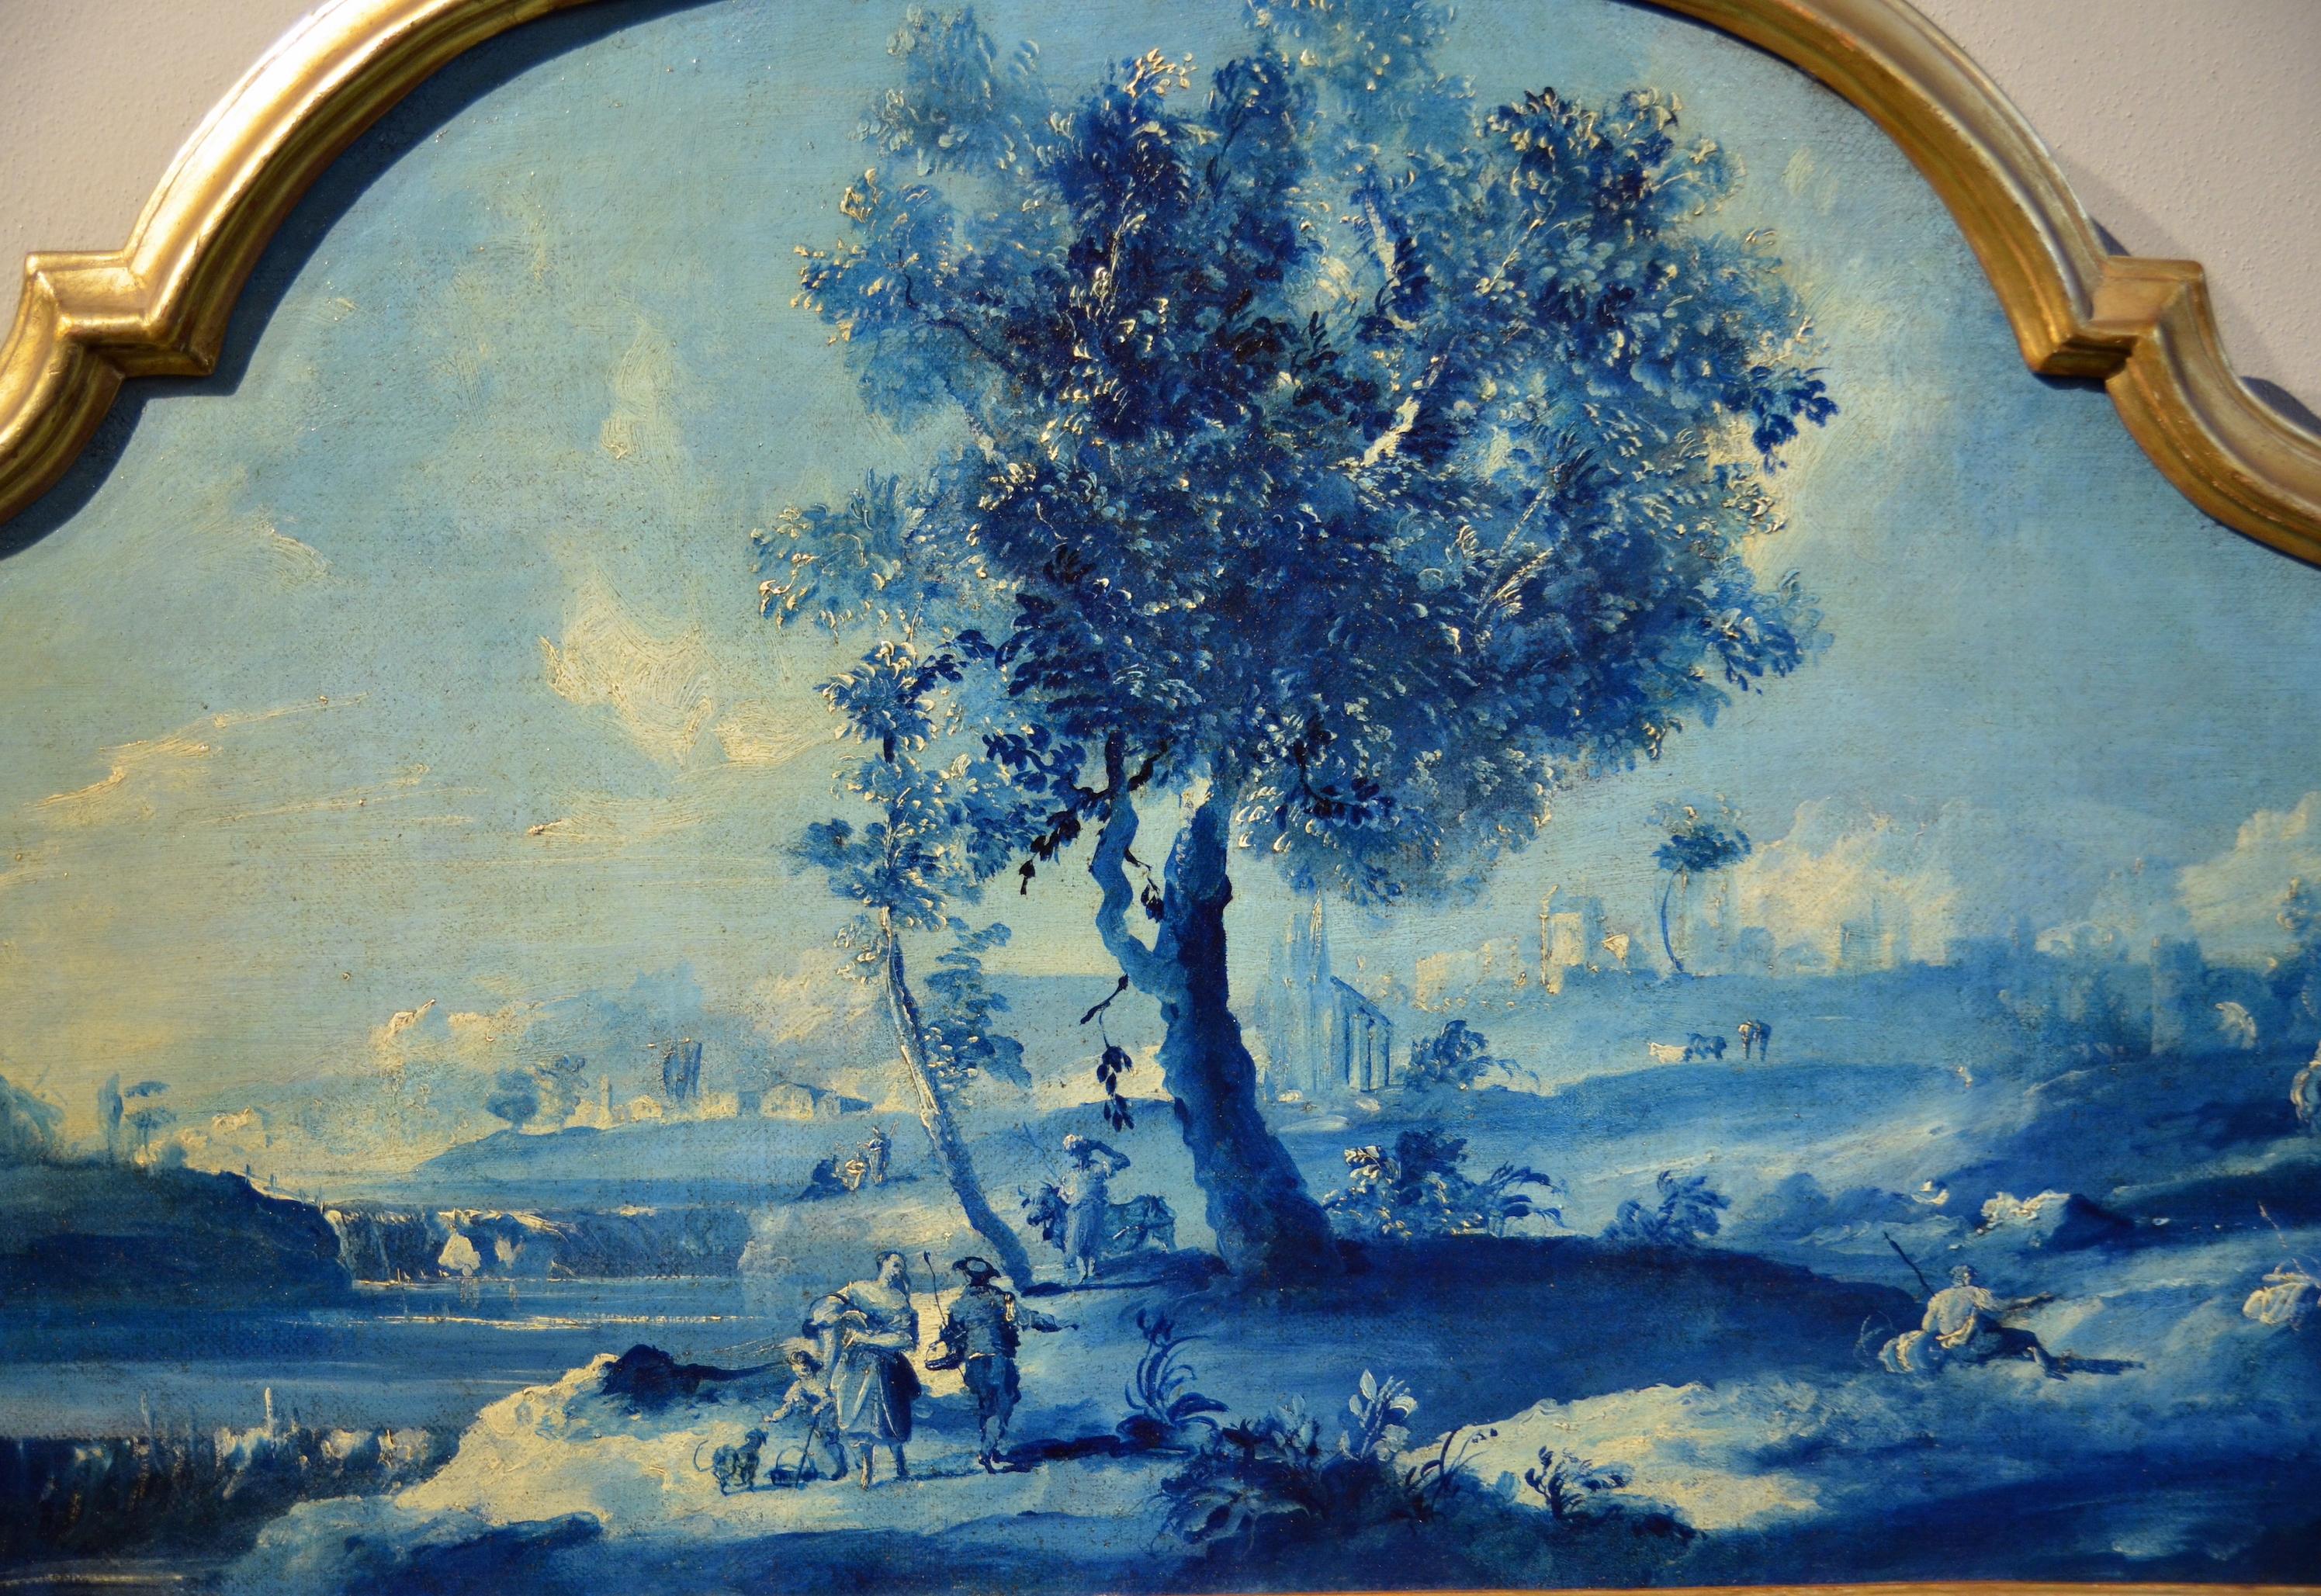 Paint Oil on canvas Pair Landscape Wood See Lake Venezia Italy Baroque Ricci Art 2